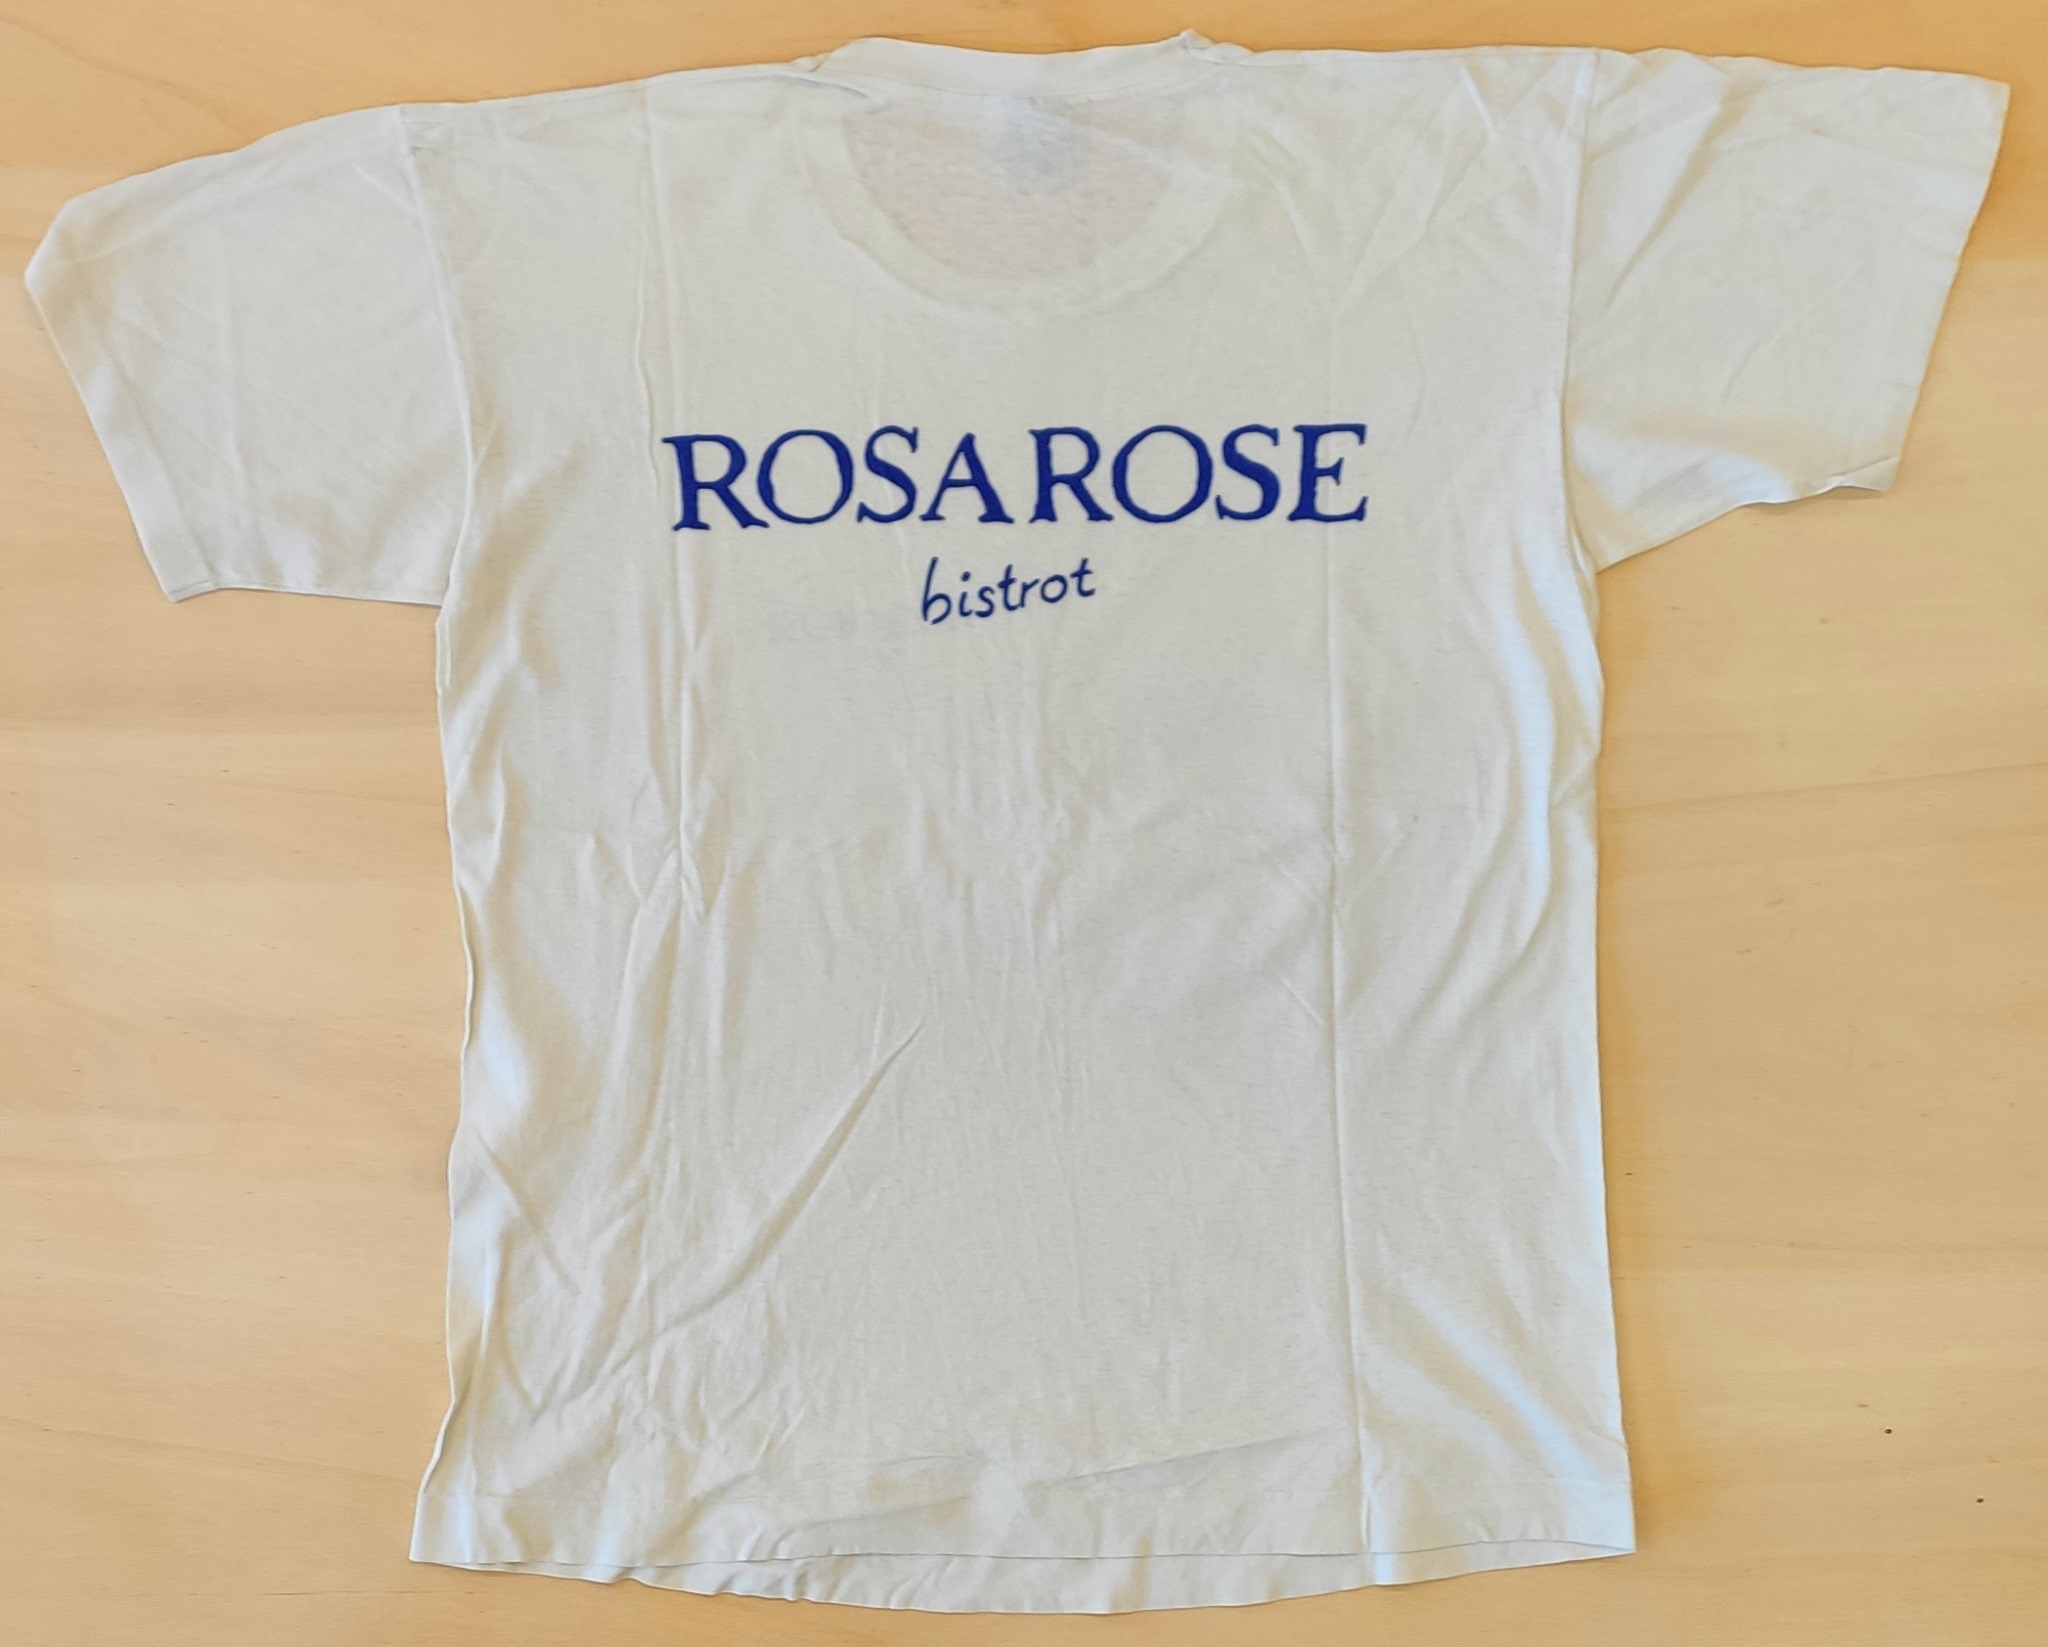 Rosa Rose Bistrot Bologna